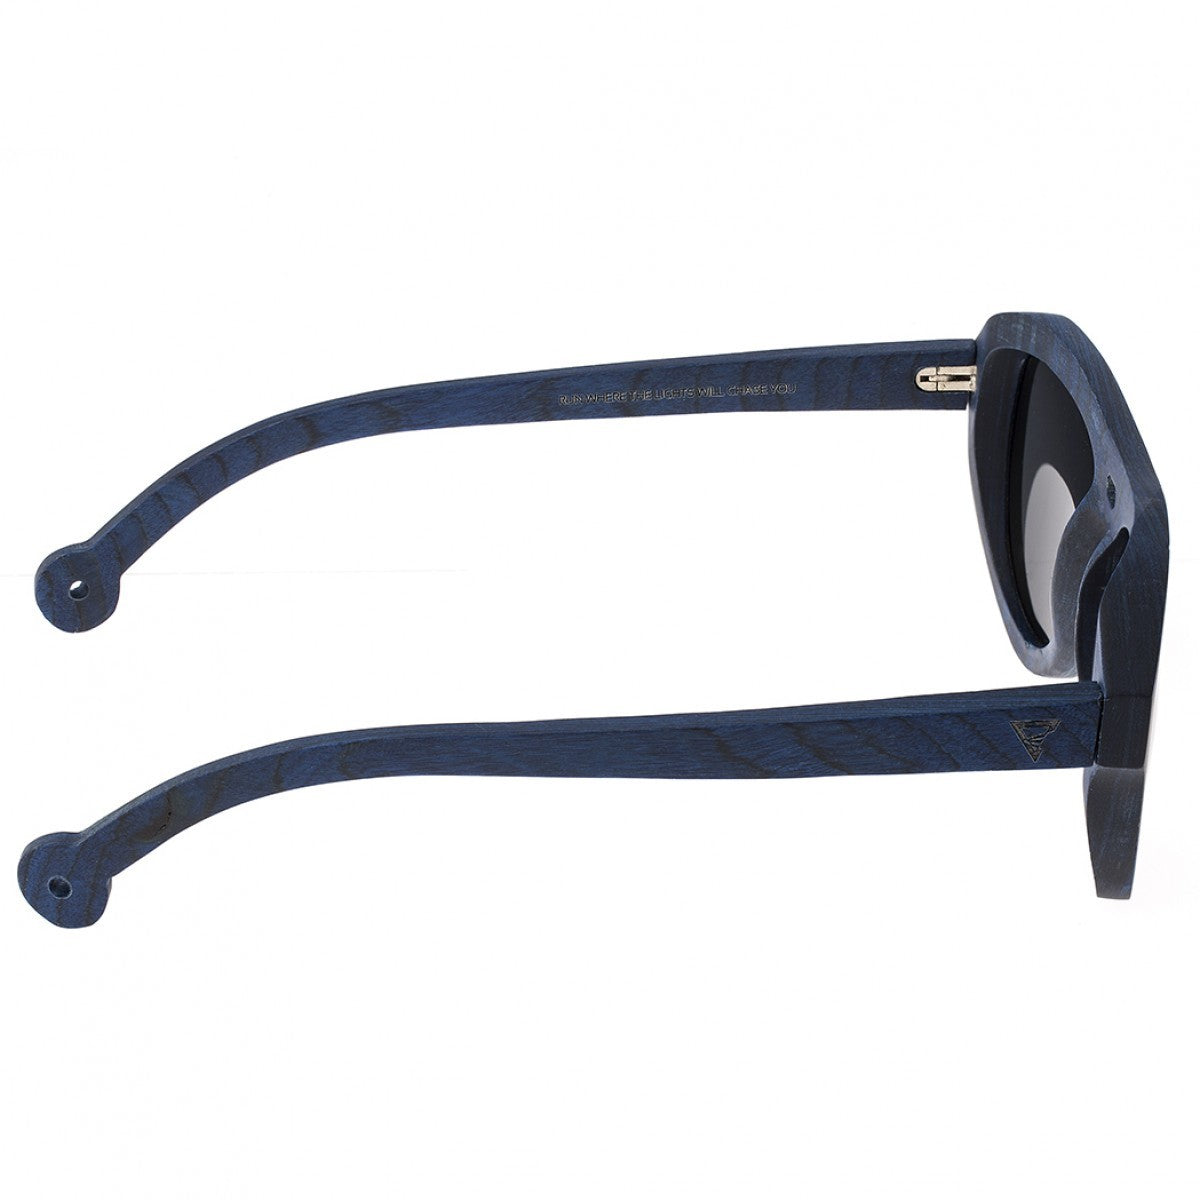 Spectrum Machado Wood Polarized Sunglasses - Blue/Black - SSGS113BK